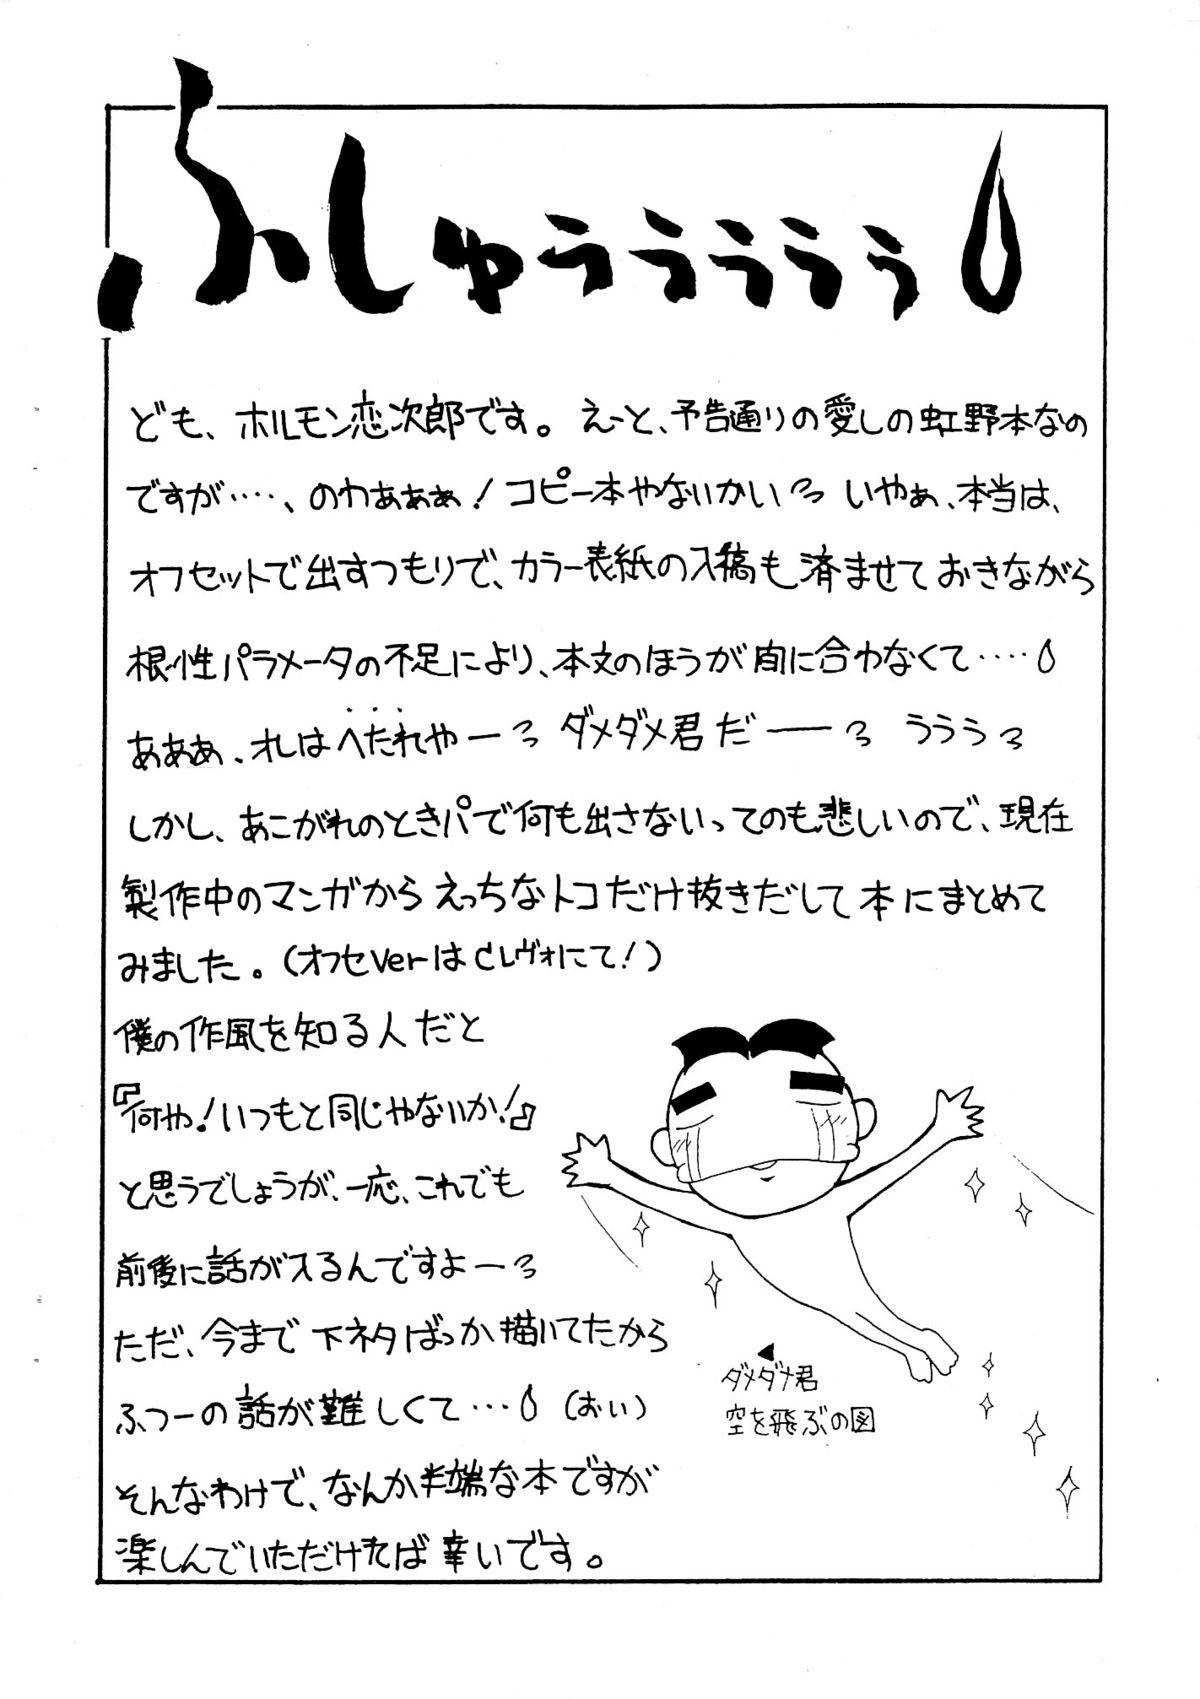 Young Tits PLEASE EAT ME - Tokimeki memorial Desperate - Page 2